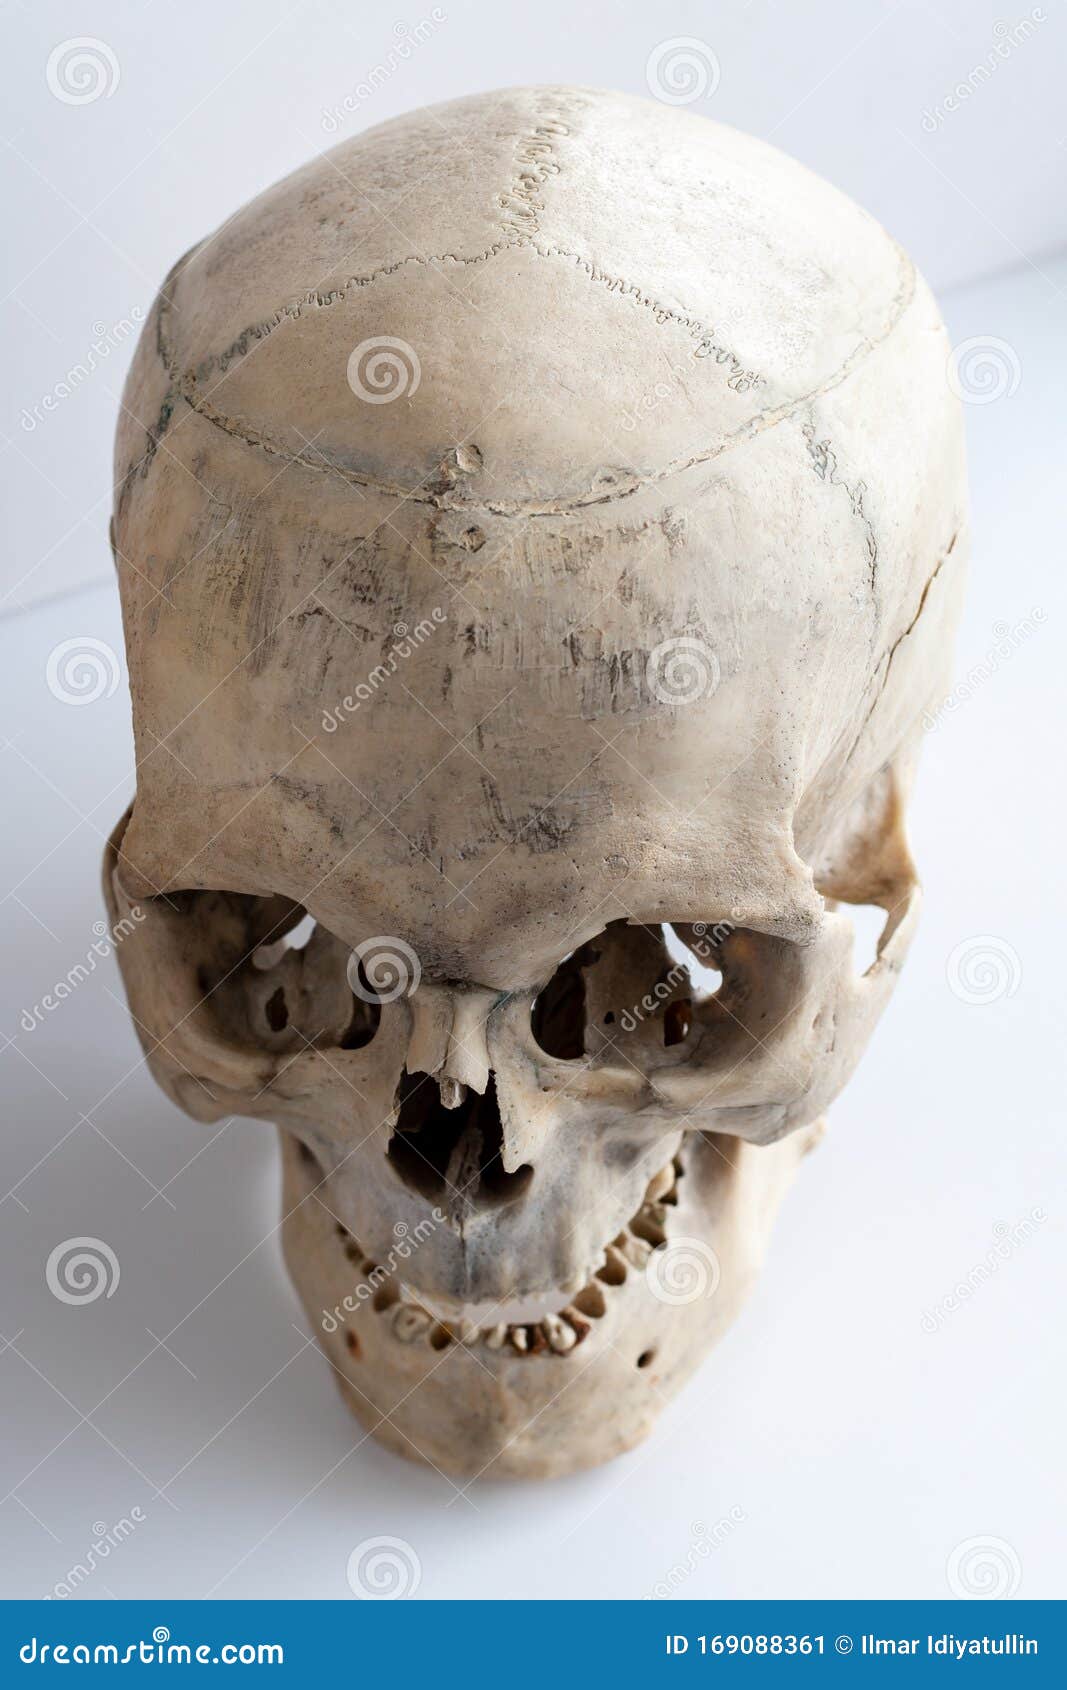 længde følsomhed Dronning Human Anatomy. the Human Skull. Top View, Side View Stock Image - Image of  black, death: 169088361